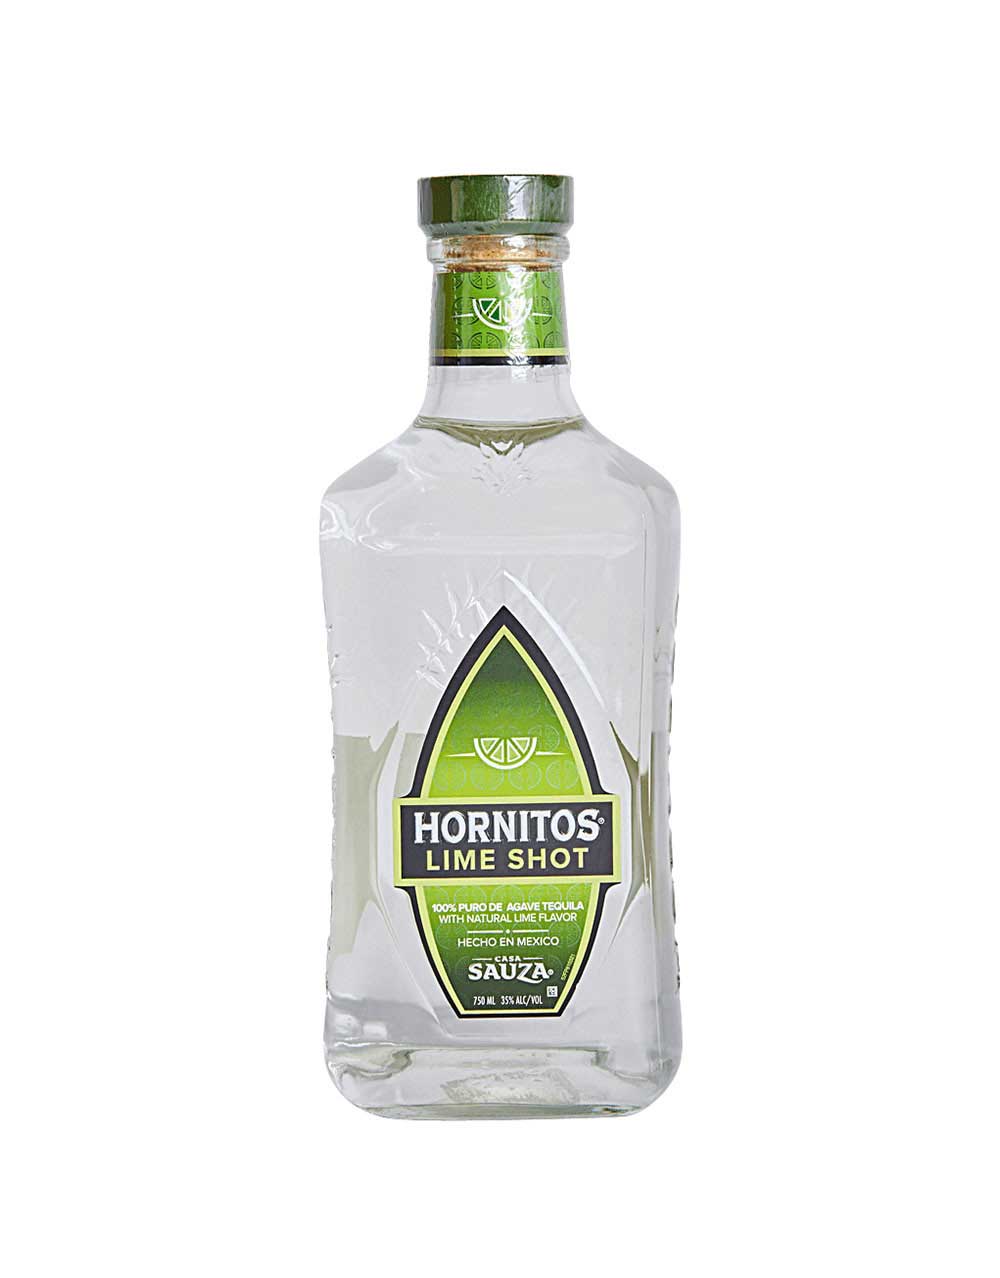 Sauza Hornitos Lime Shot Tequila